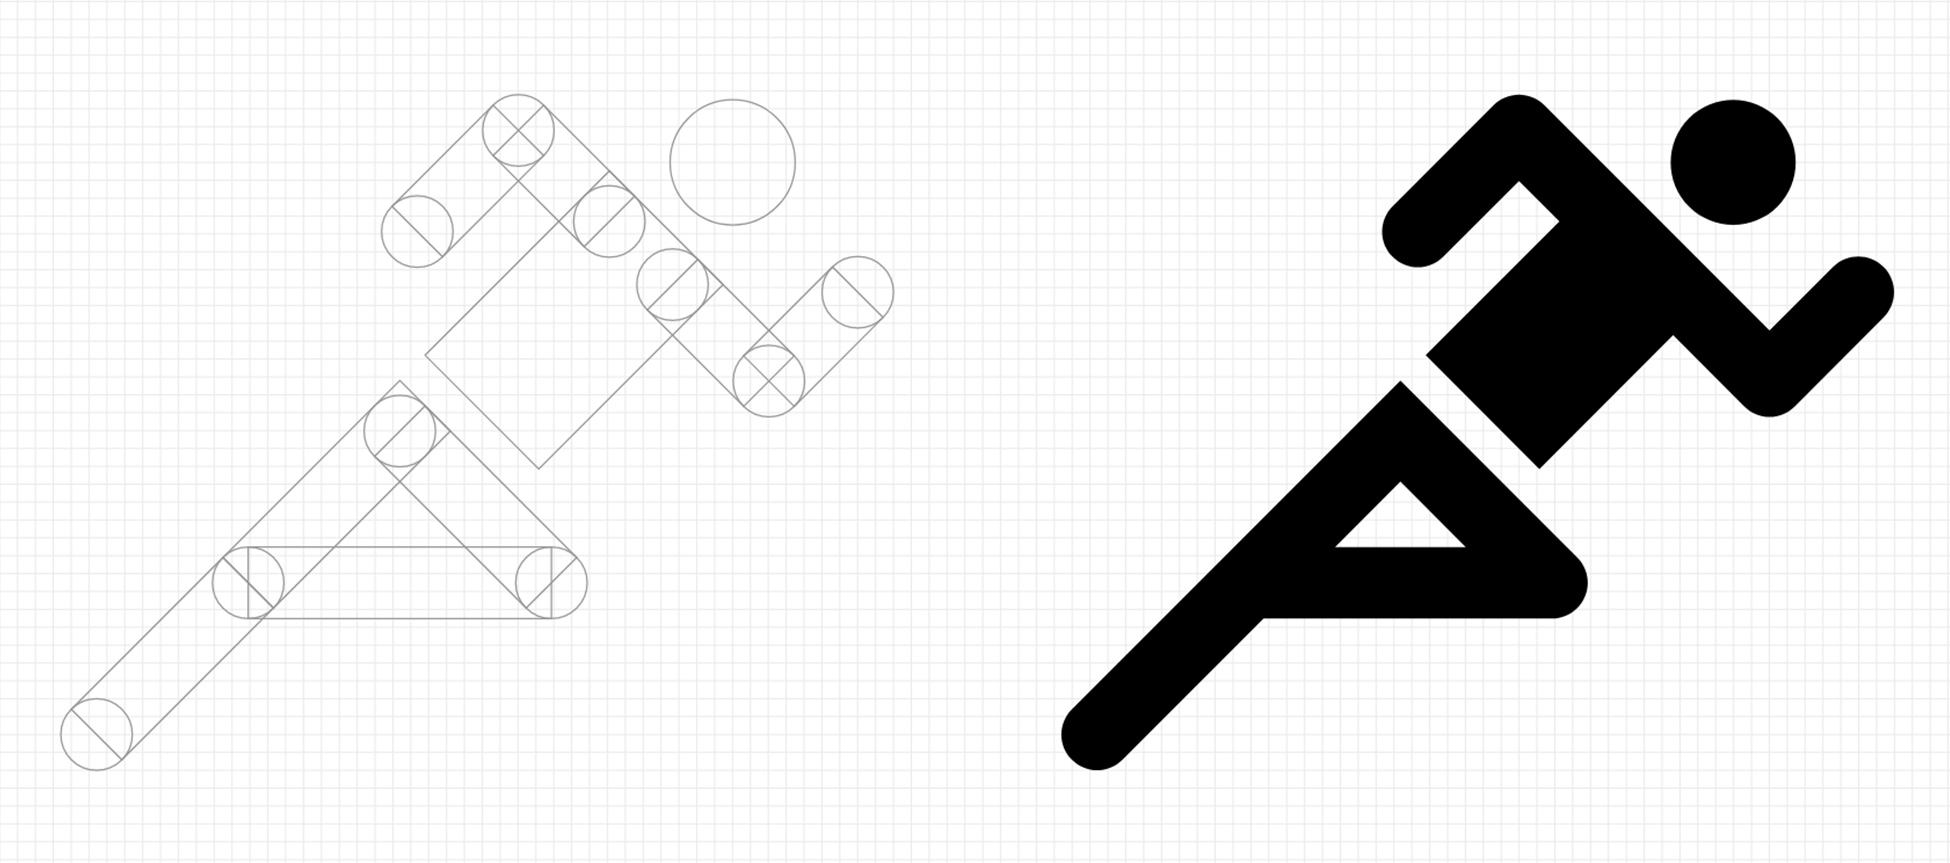 pictogramme-logo-jeux-olympiques-geometrie